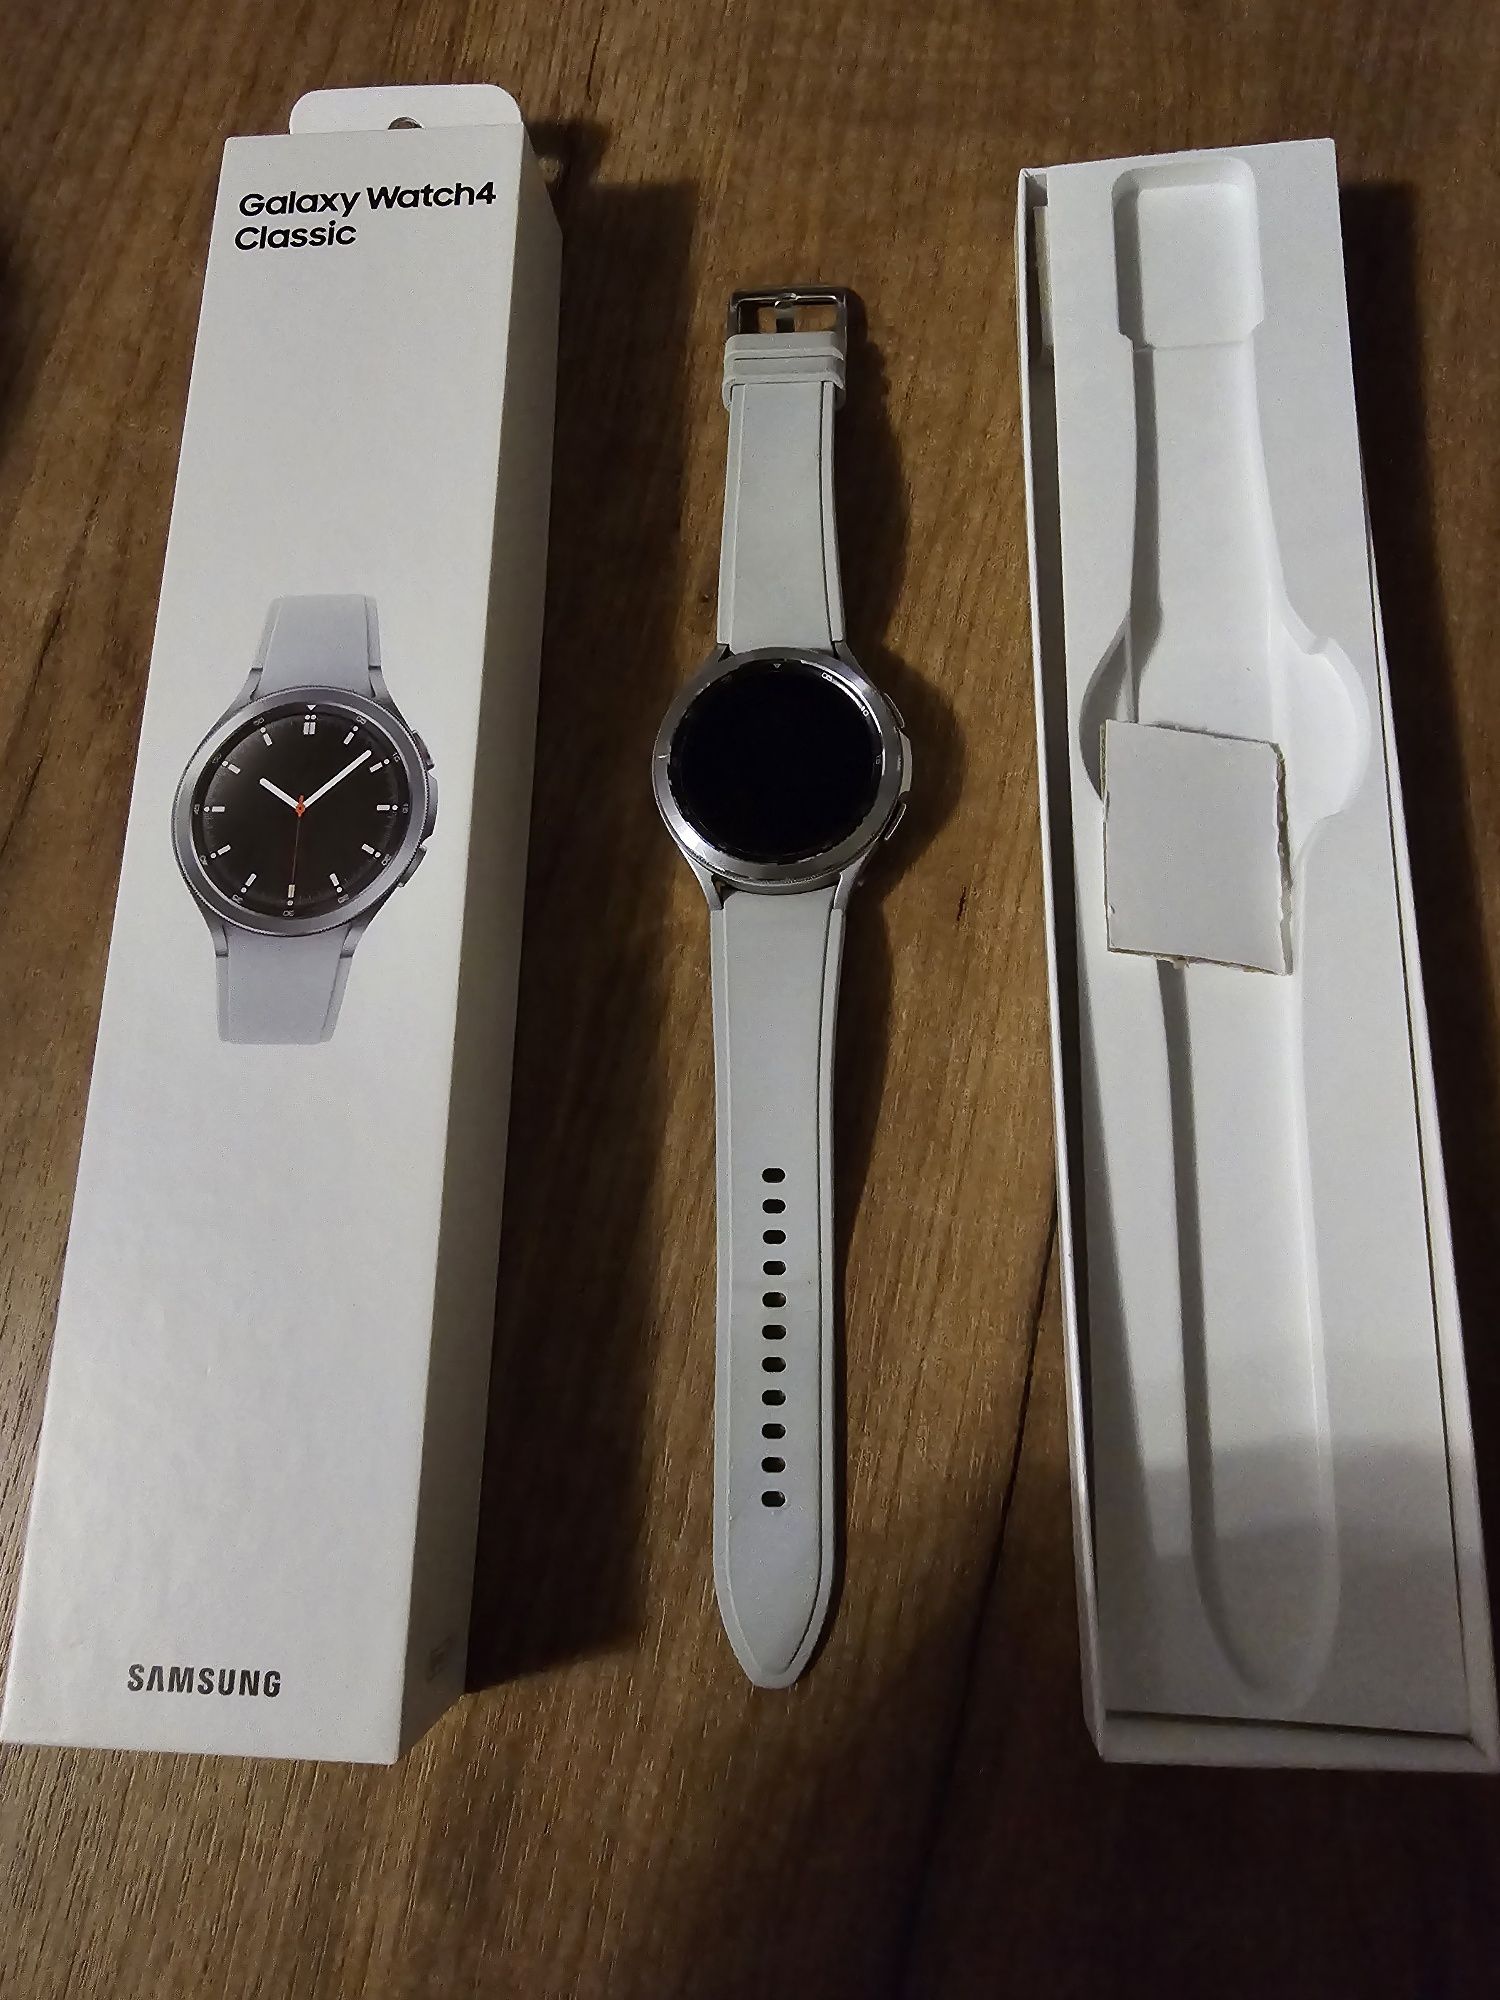 Samsung Galaxy Watch 46 mm classic lte